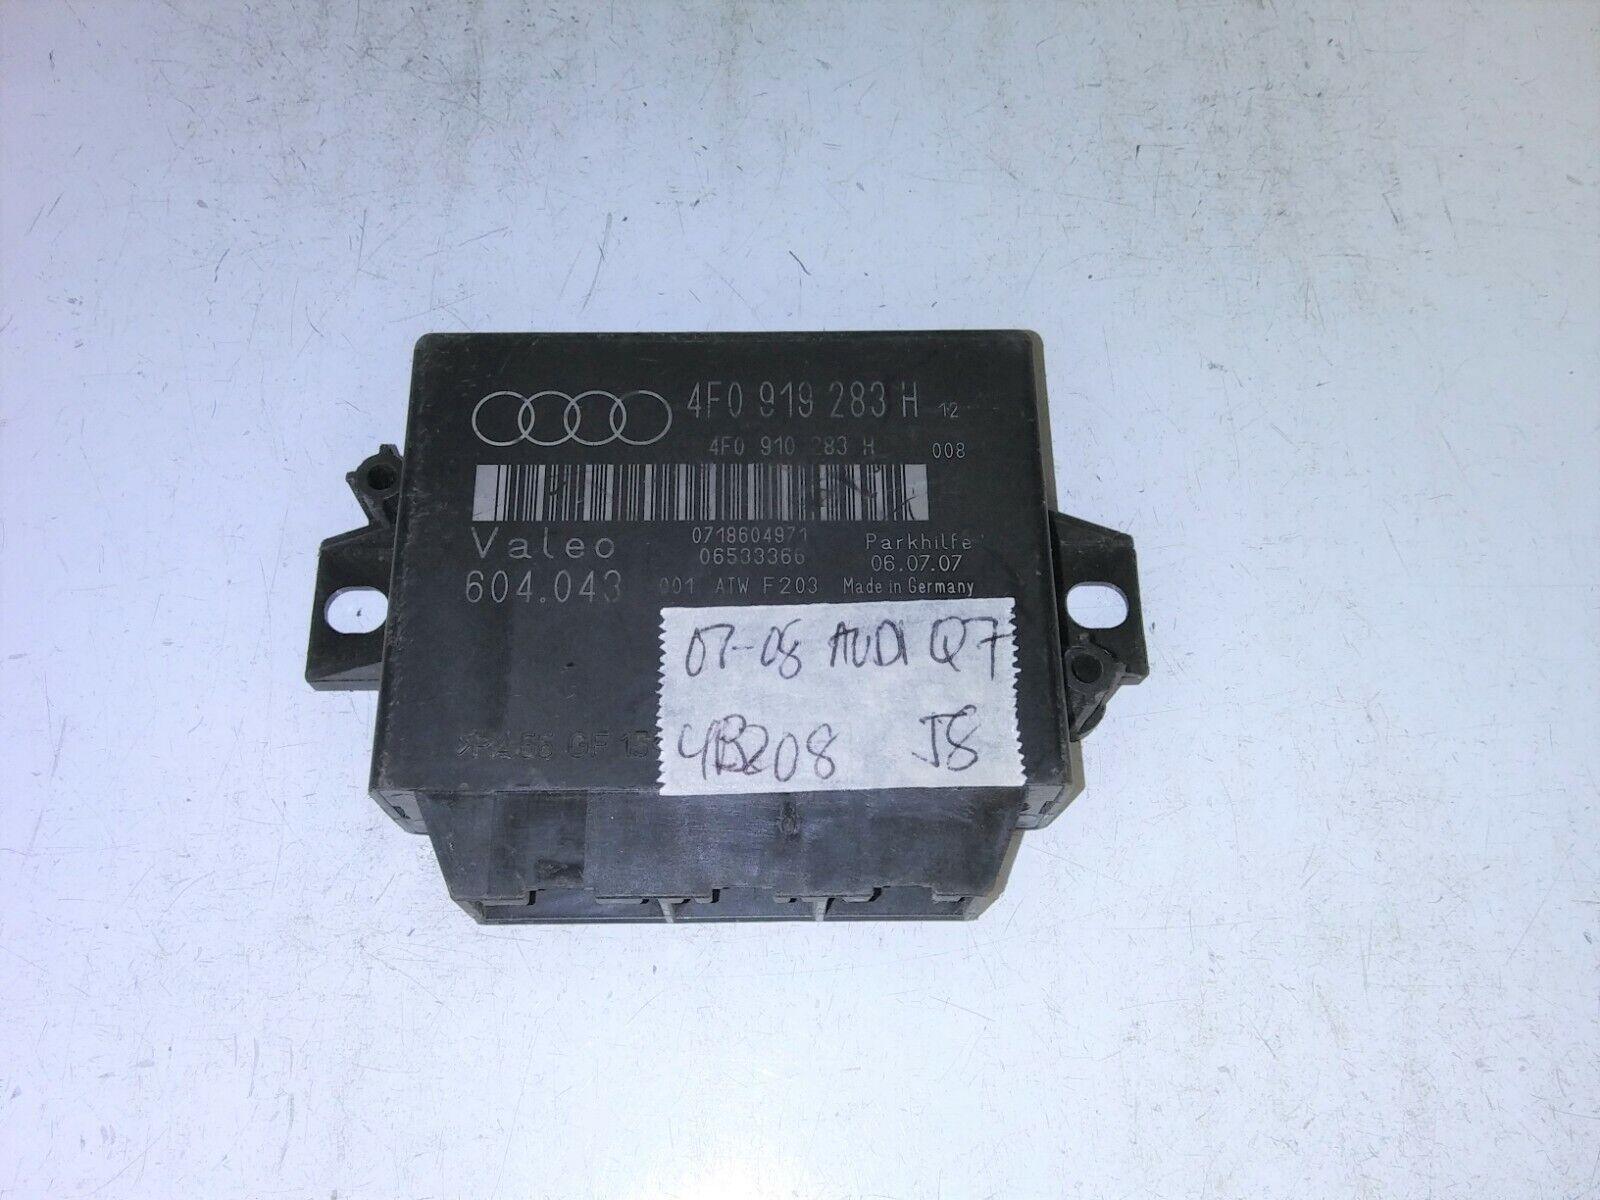 2007-2008 Audi Q7 park aid assist control module 4F0 919 283 H - Swan Auto